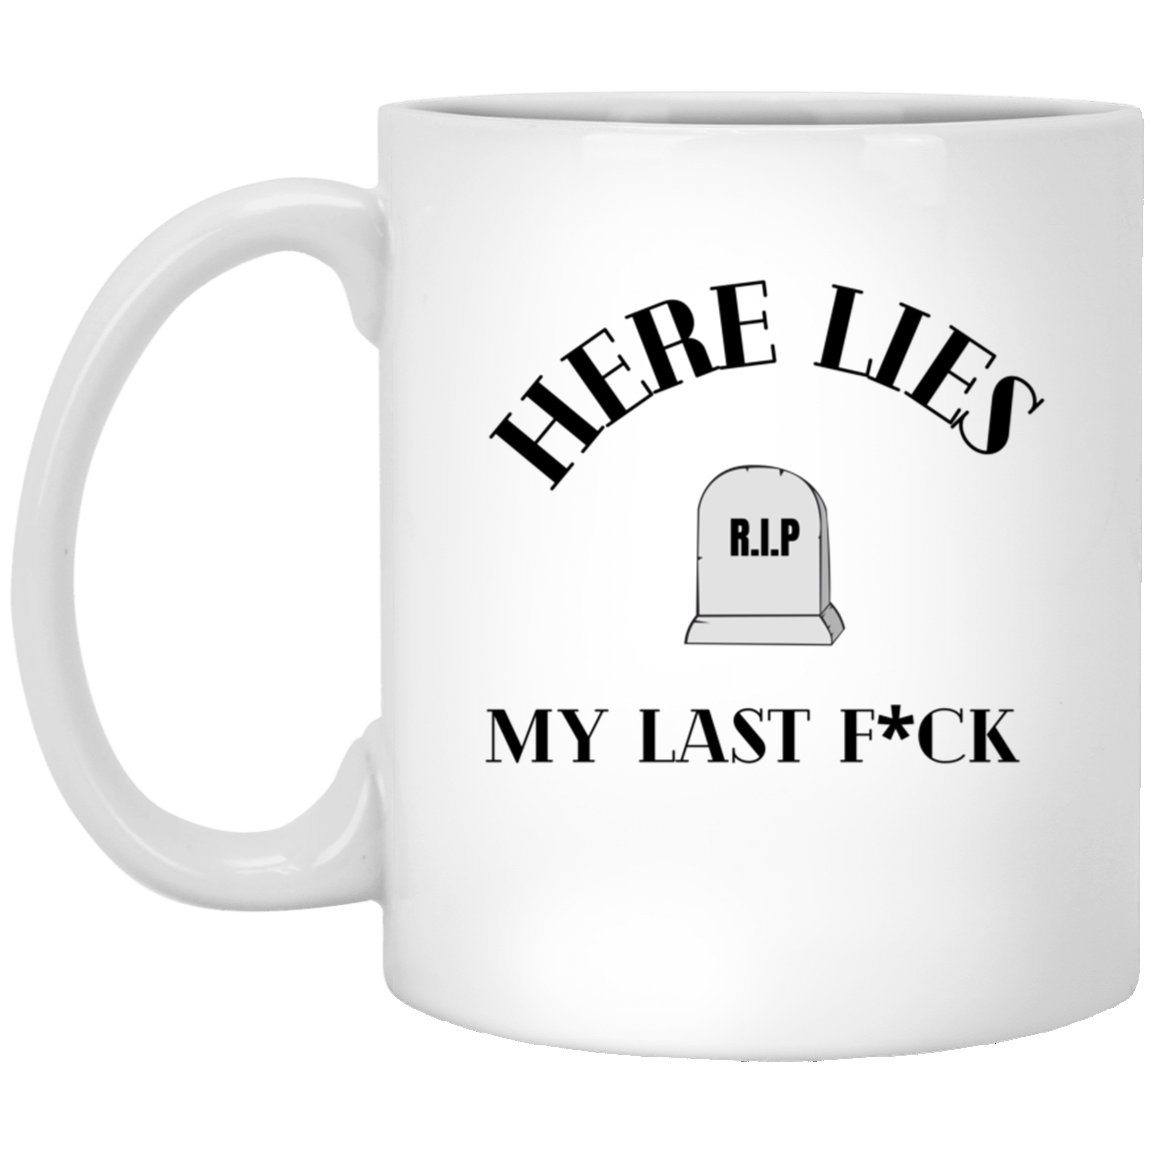 Here Lies my - Mug